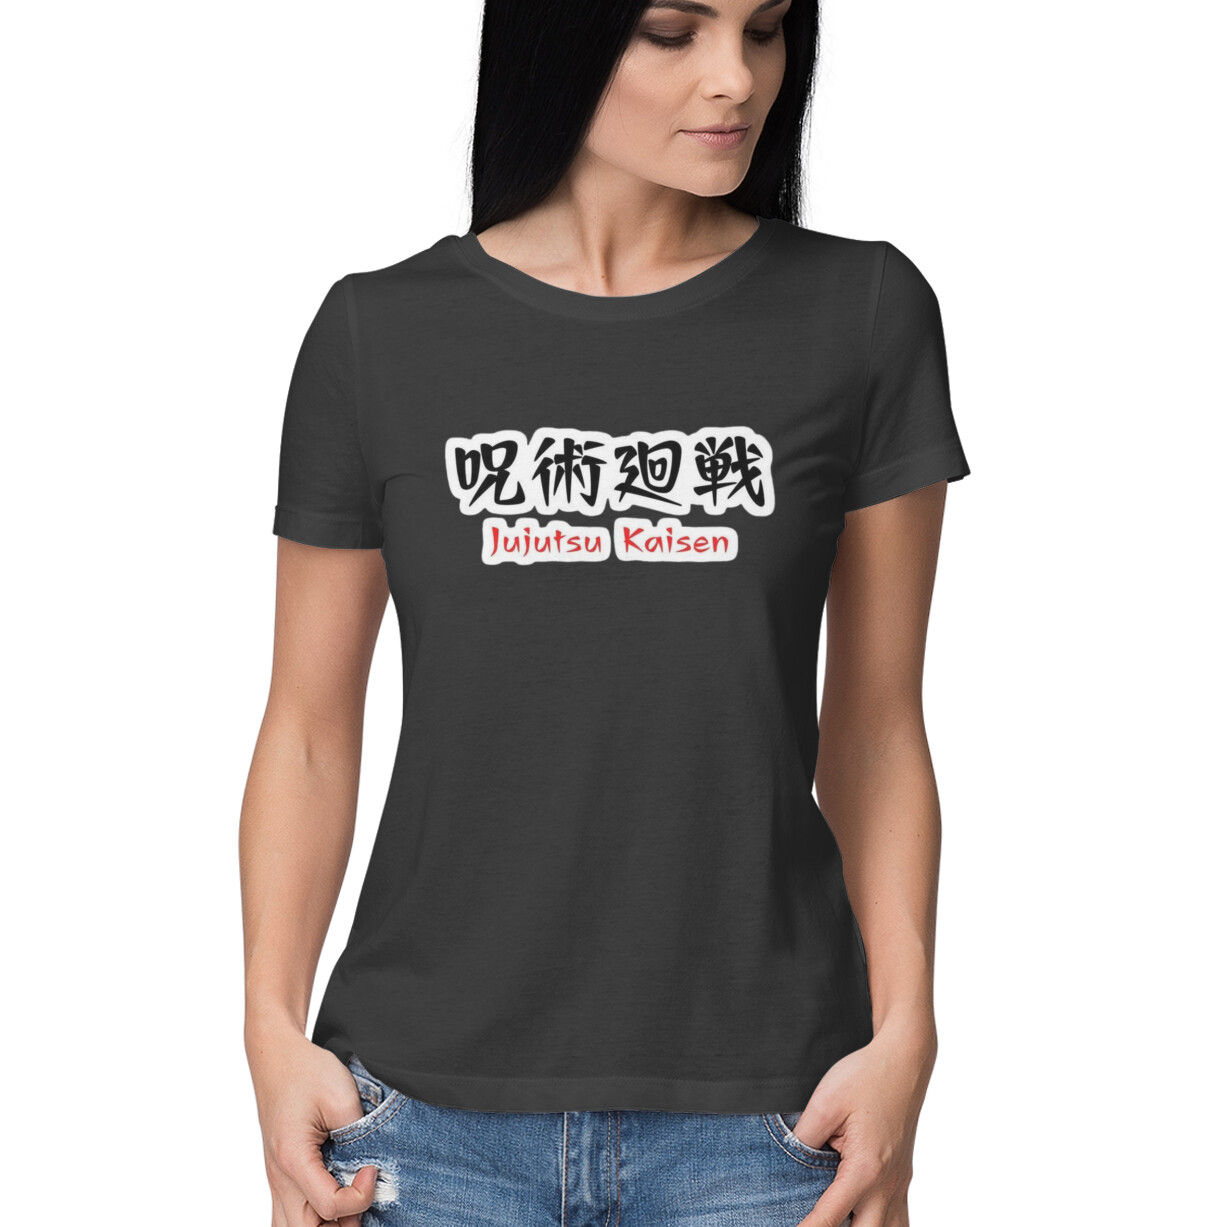 jjk Women's T-shirt